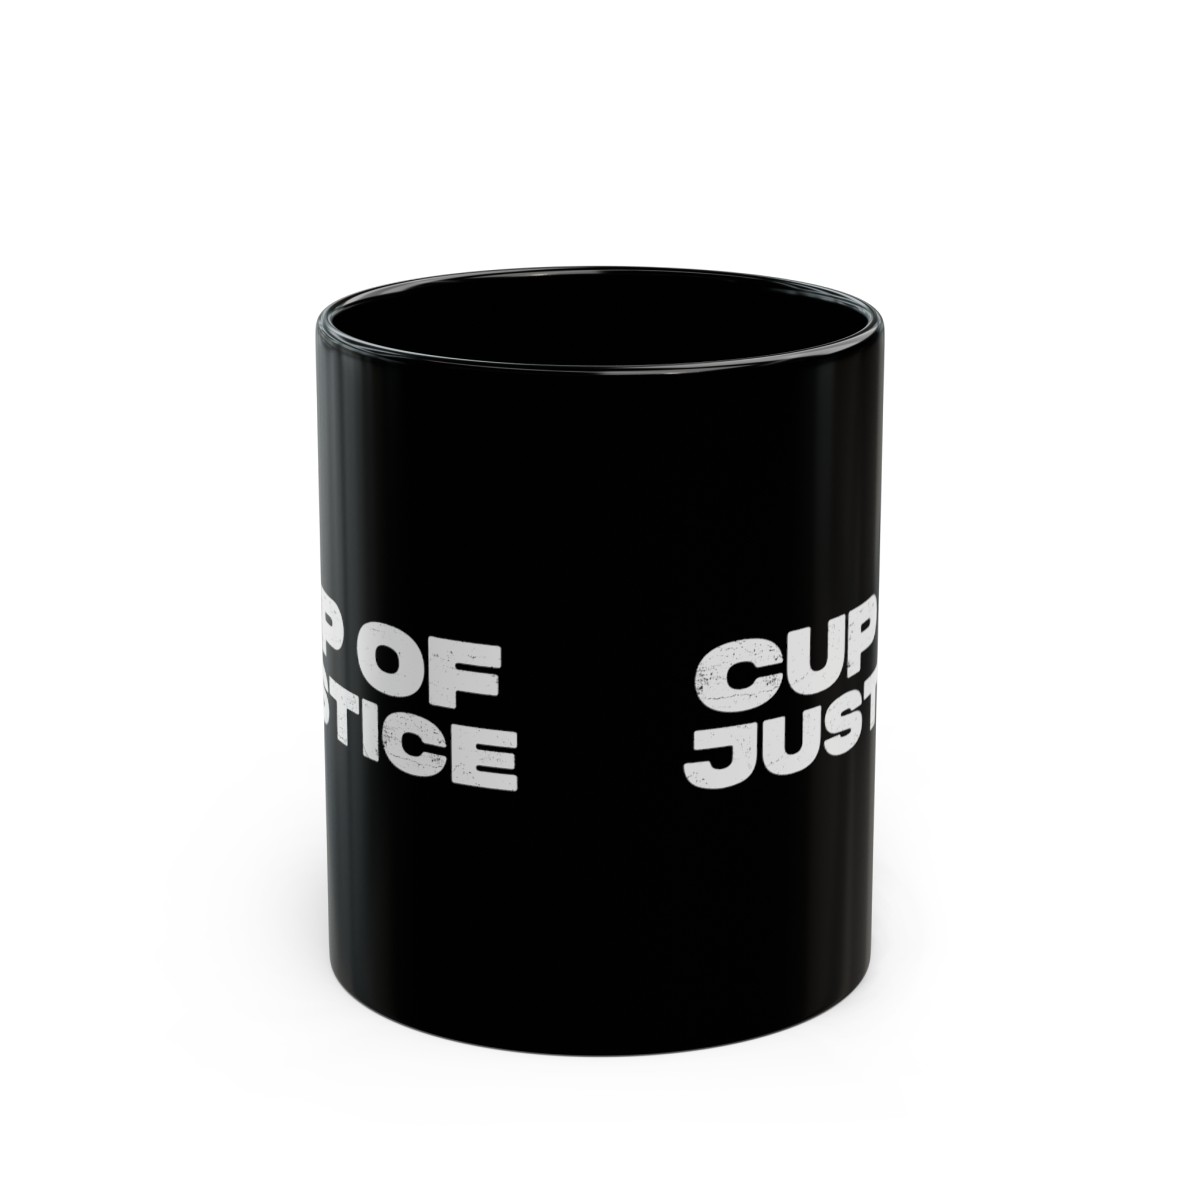 Cup of Justice 11oz Black Mug product thumbnail image